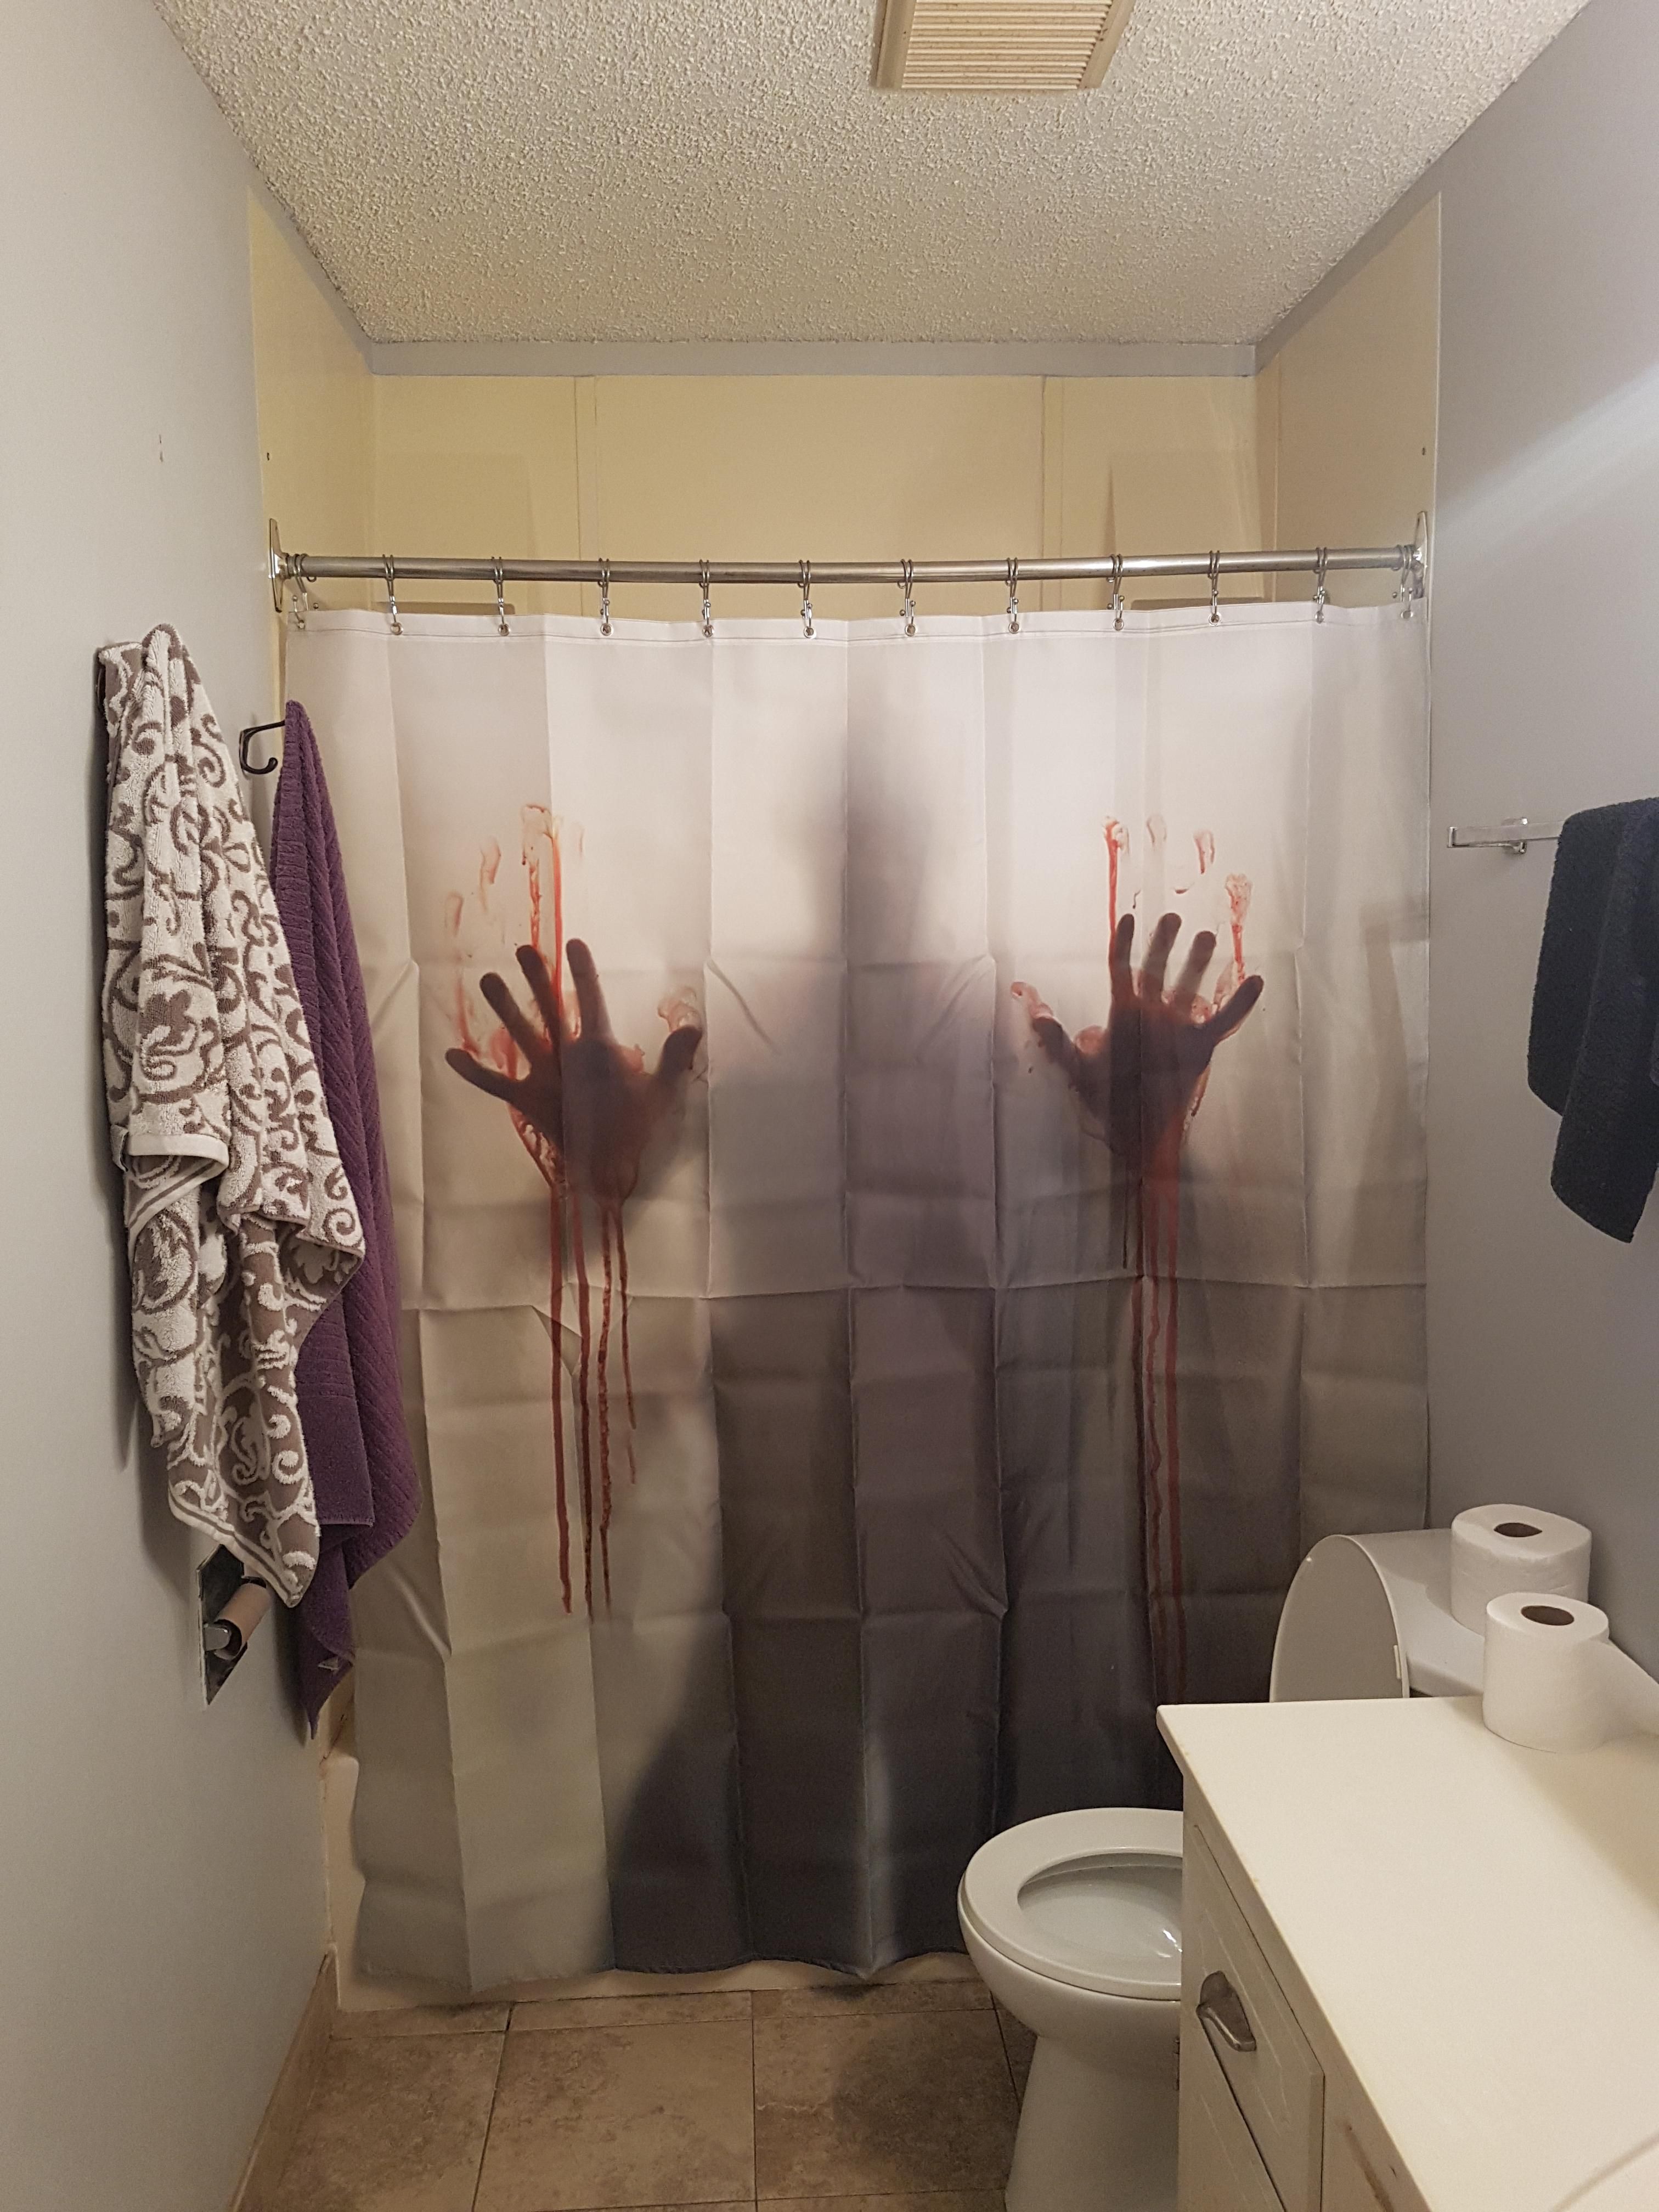 Just got a new shower curtian. I hope my kids like it